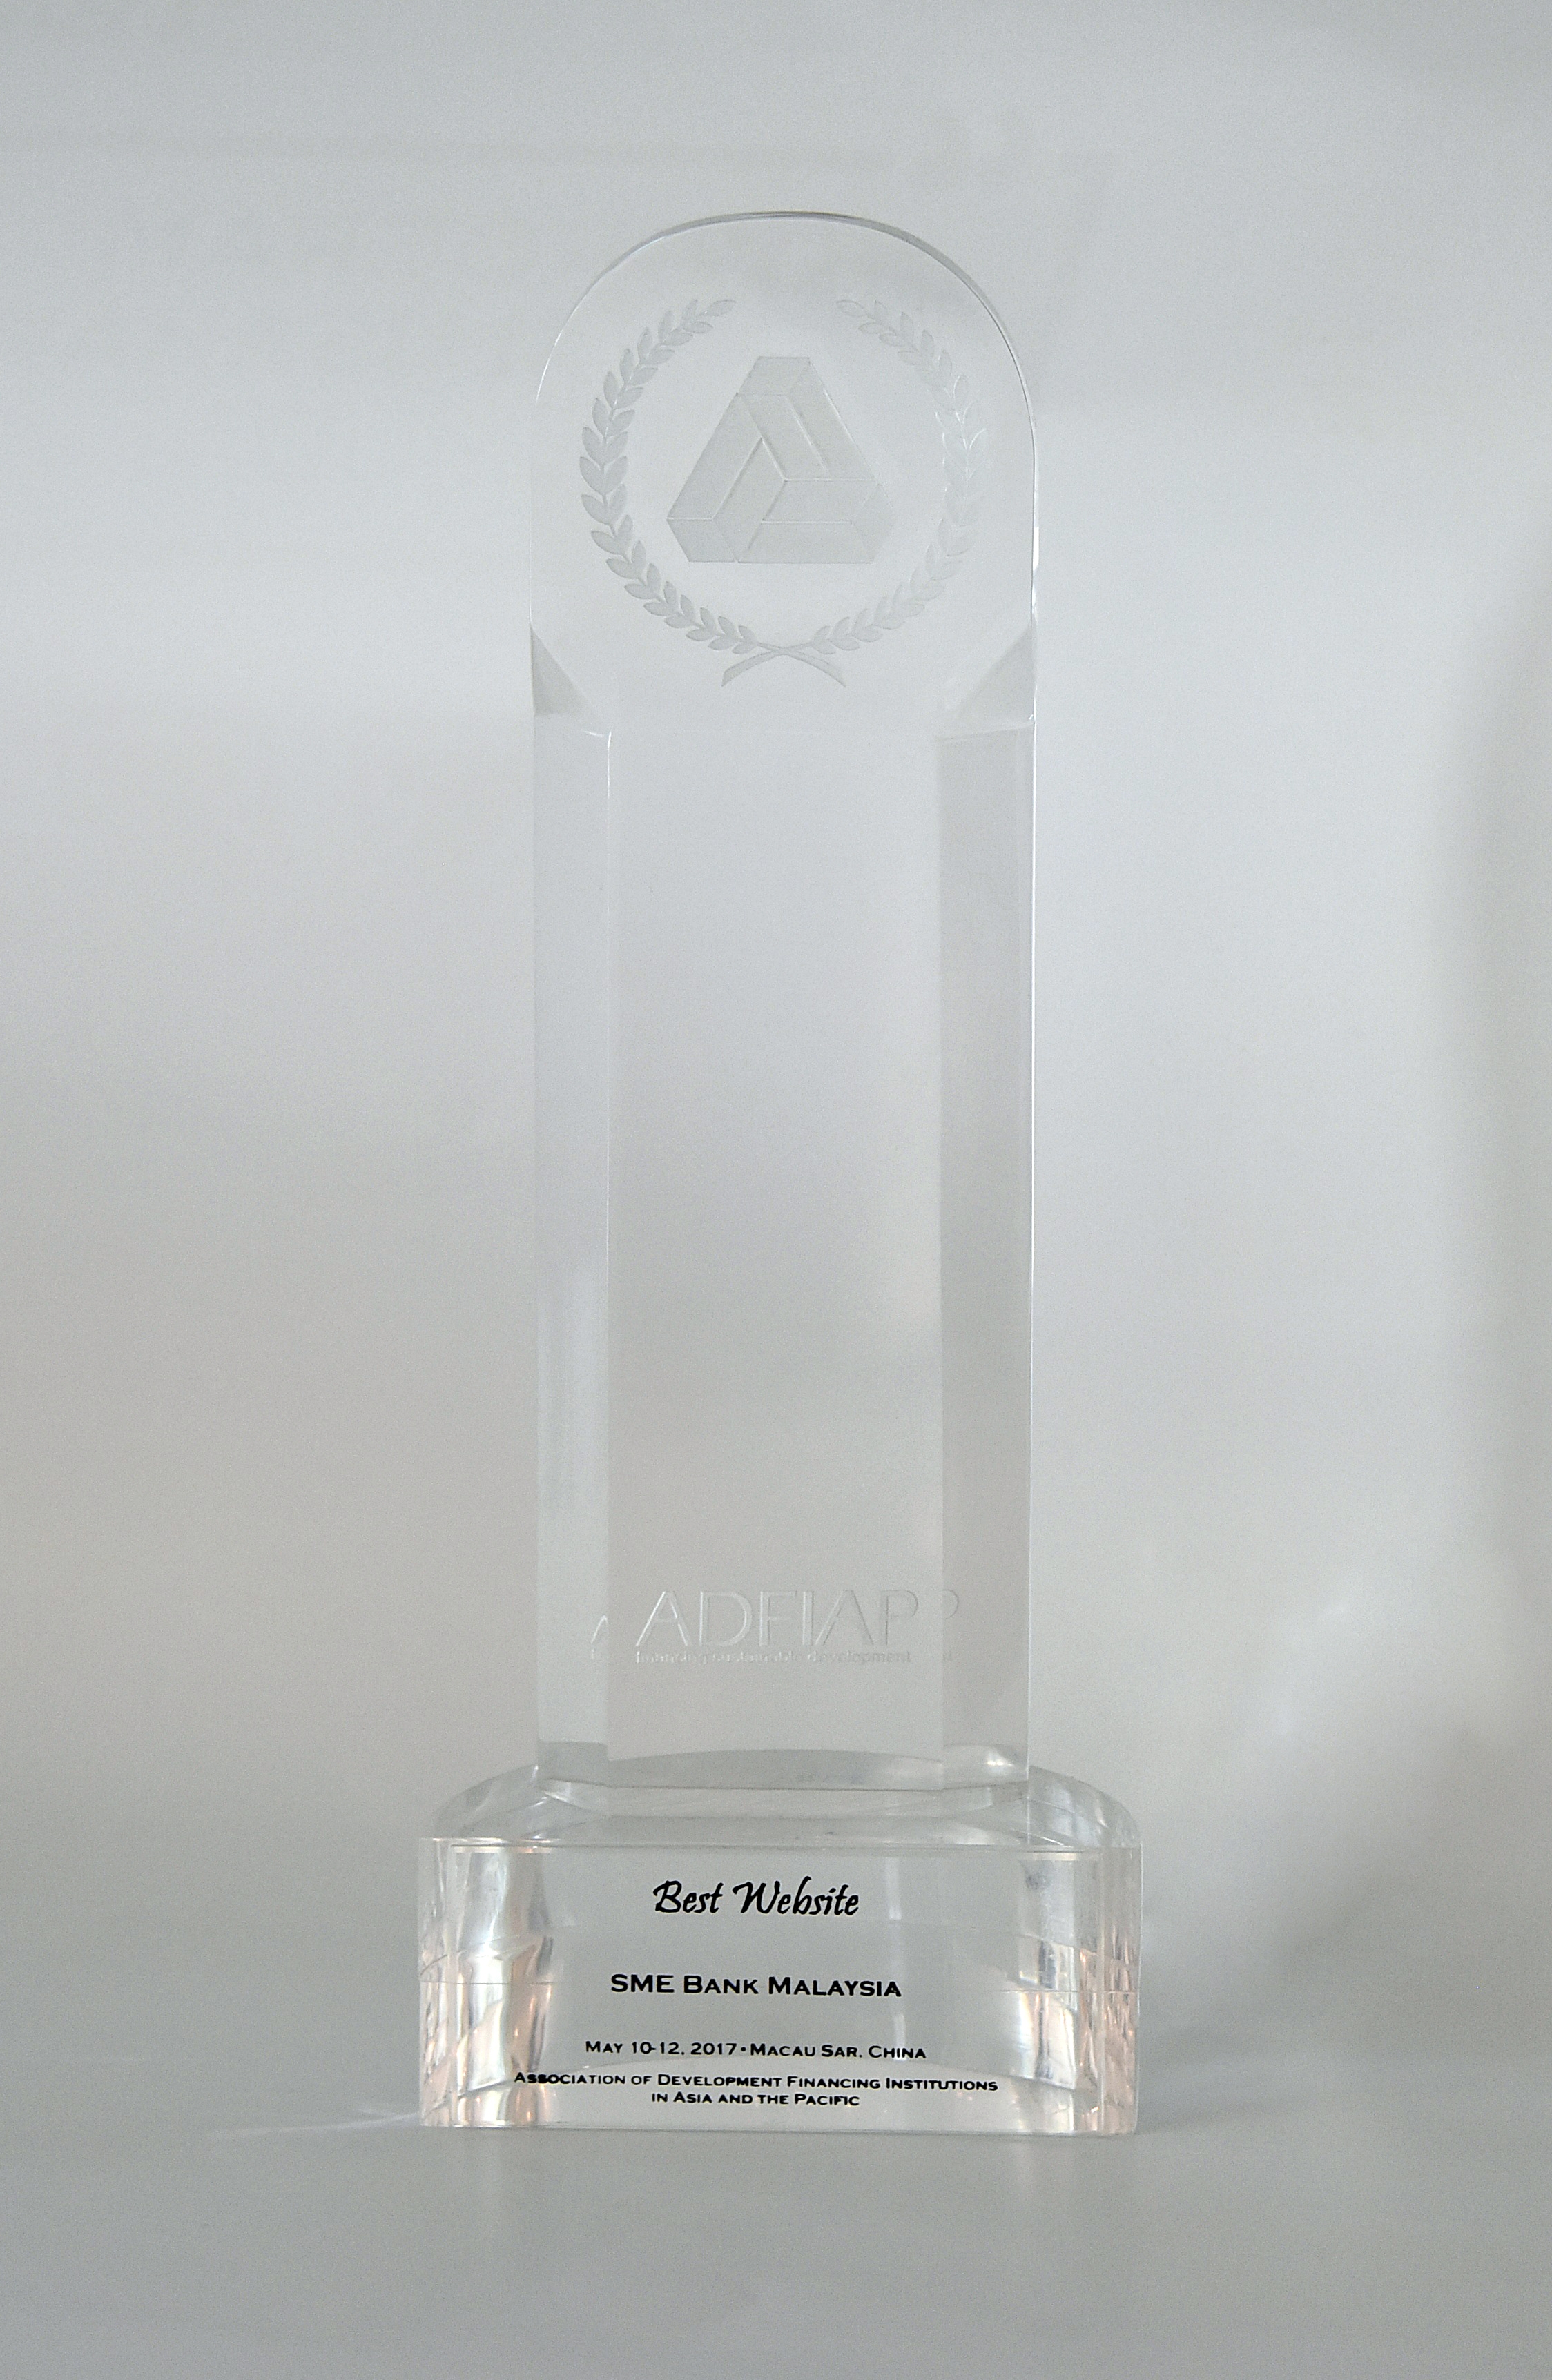 ADFIAP Awards 2017 - Special Awards – Best Website